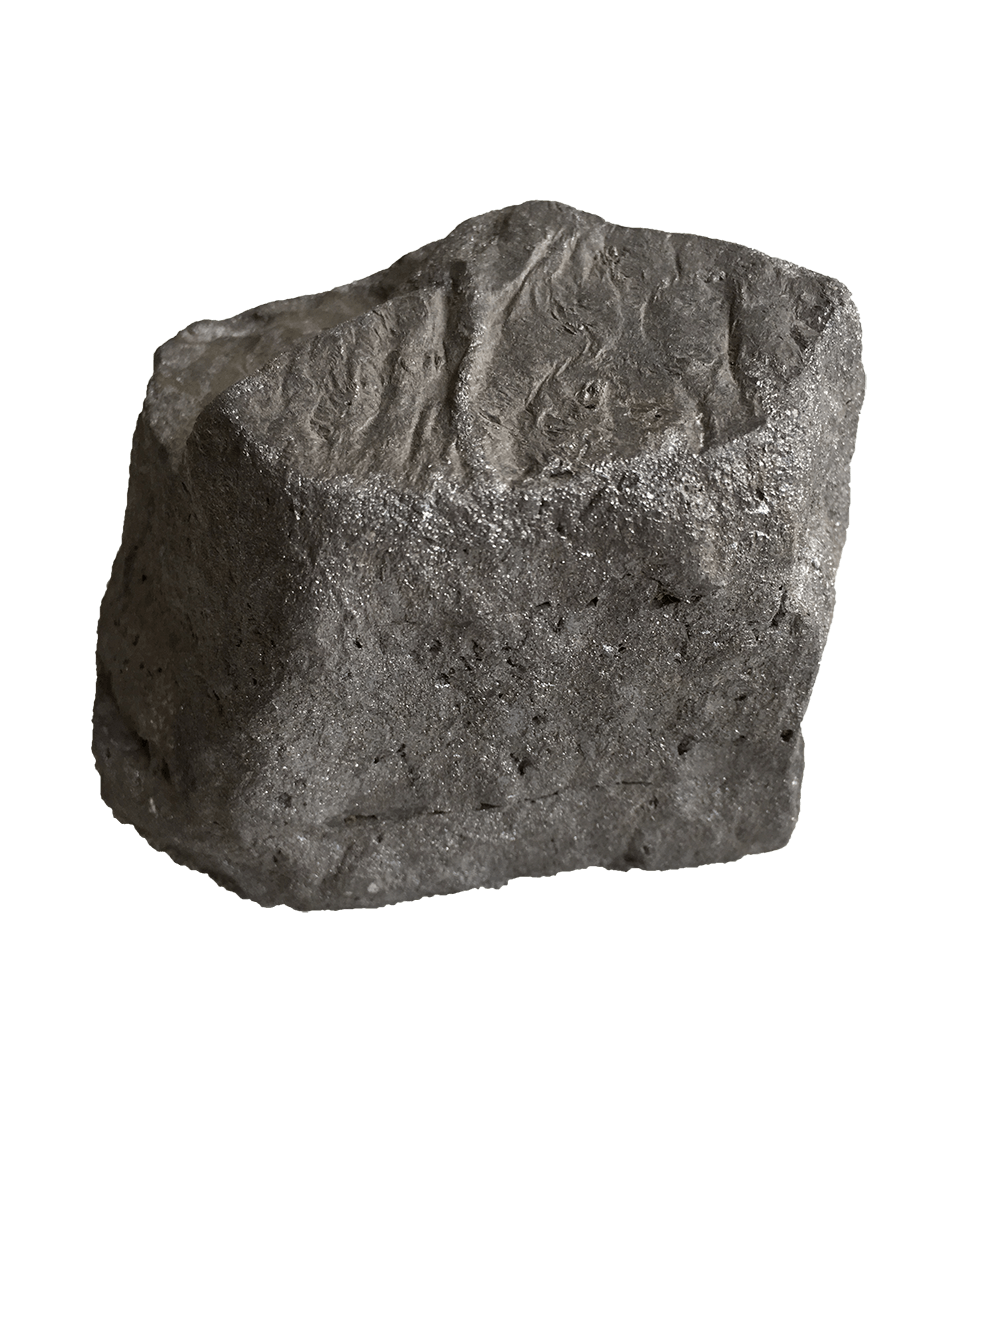 kisspng-mining-chromite-ore-chromium-ferrochrome-lateritic-nickel-ore-deposits-5b05ca5adbf6b1.205167641527106138901